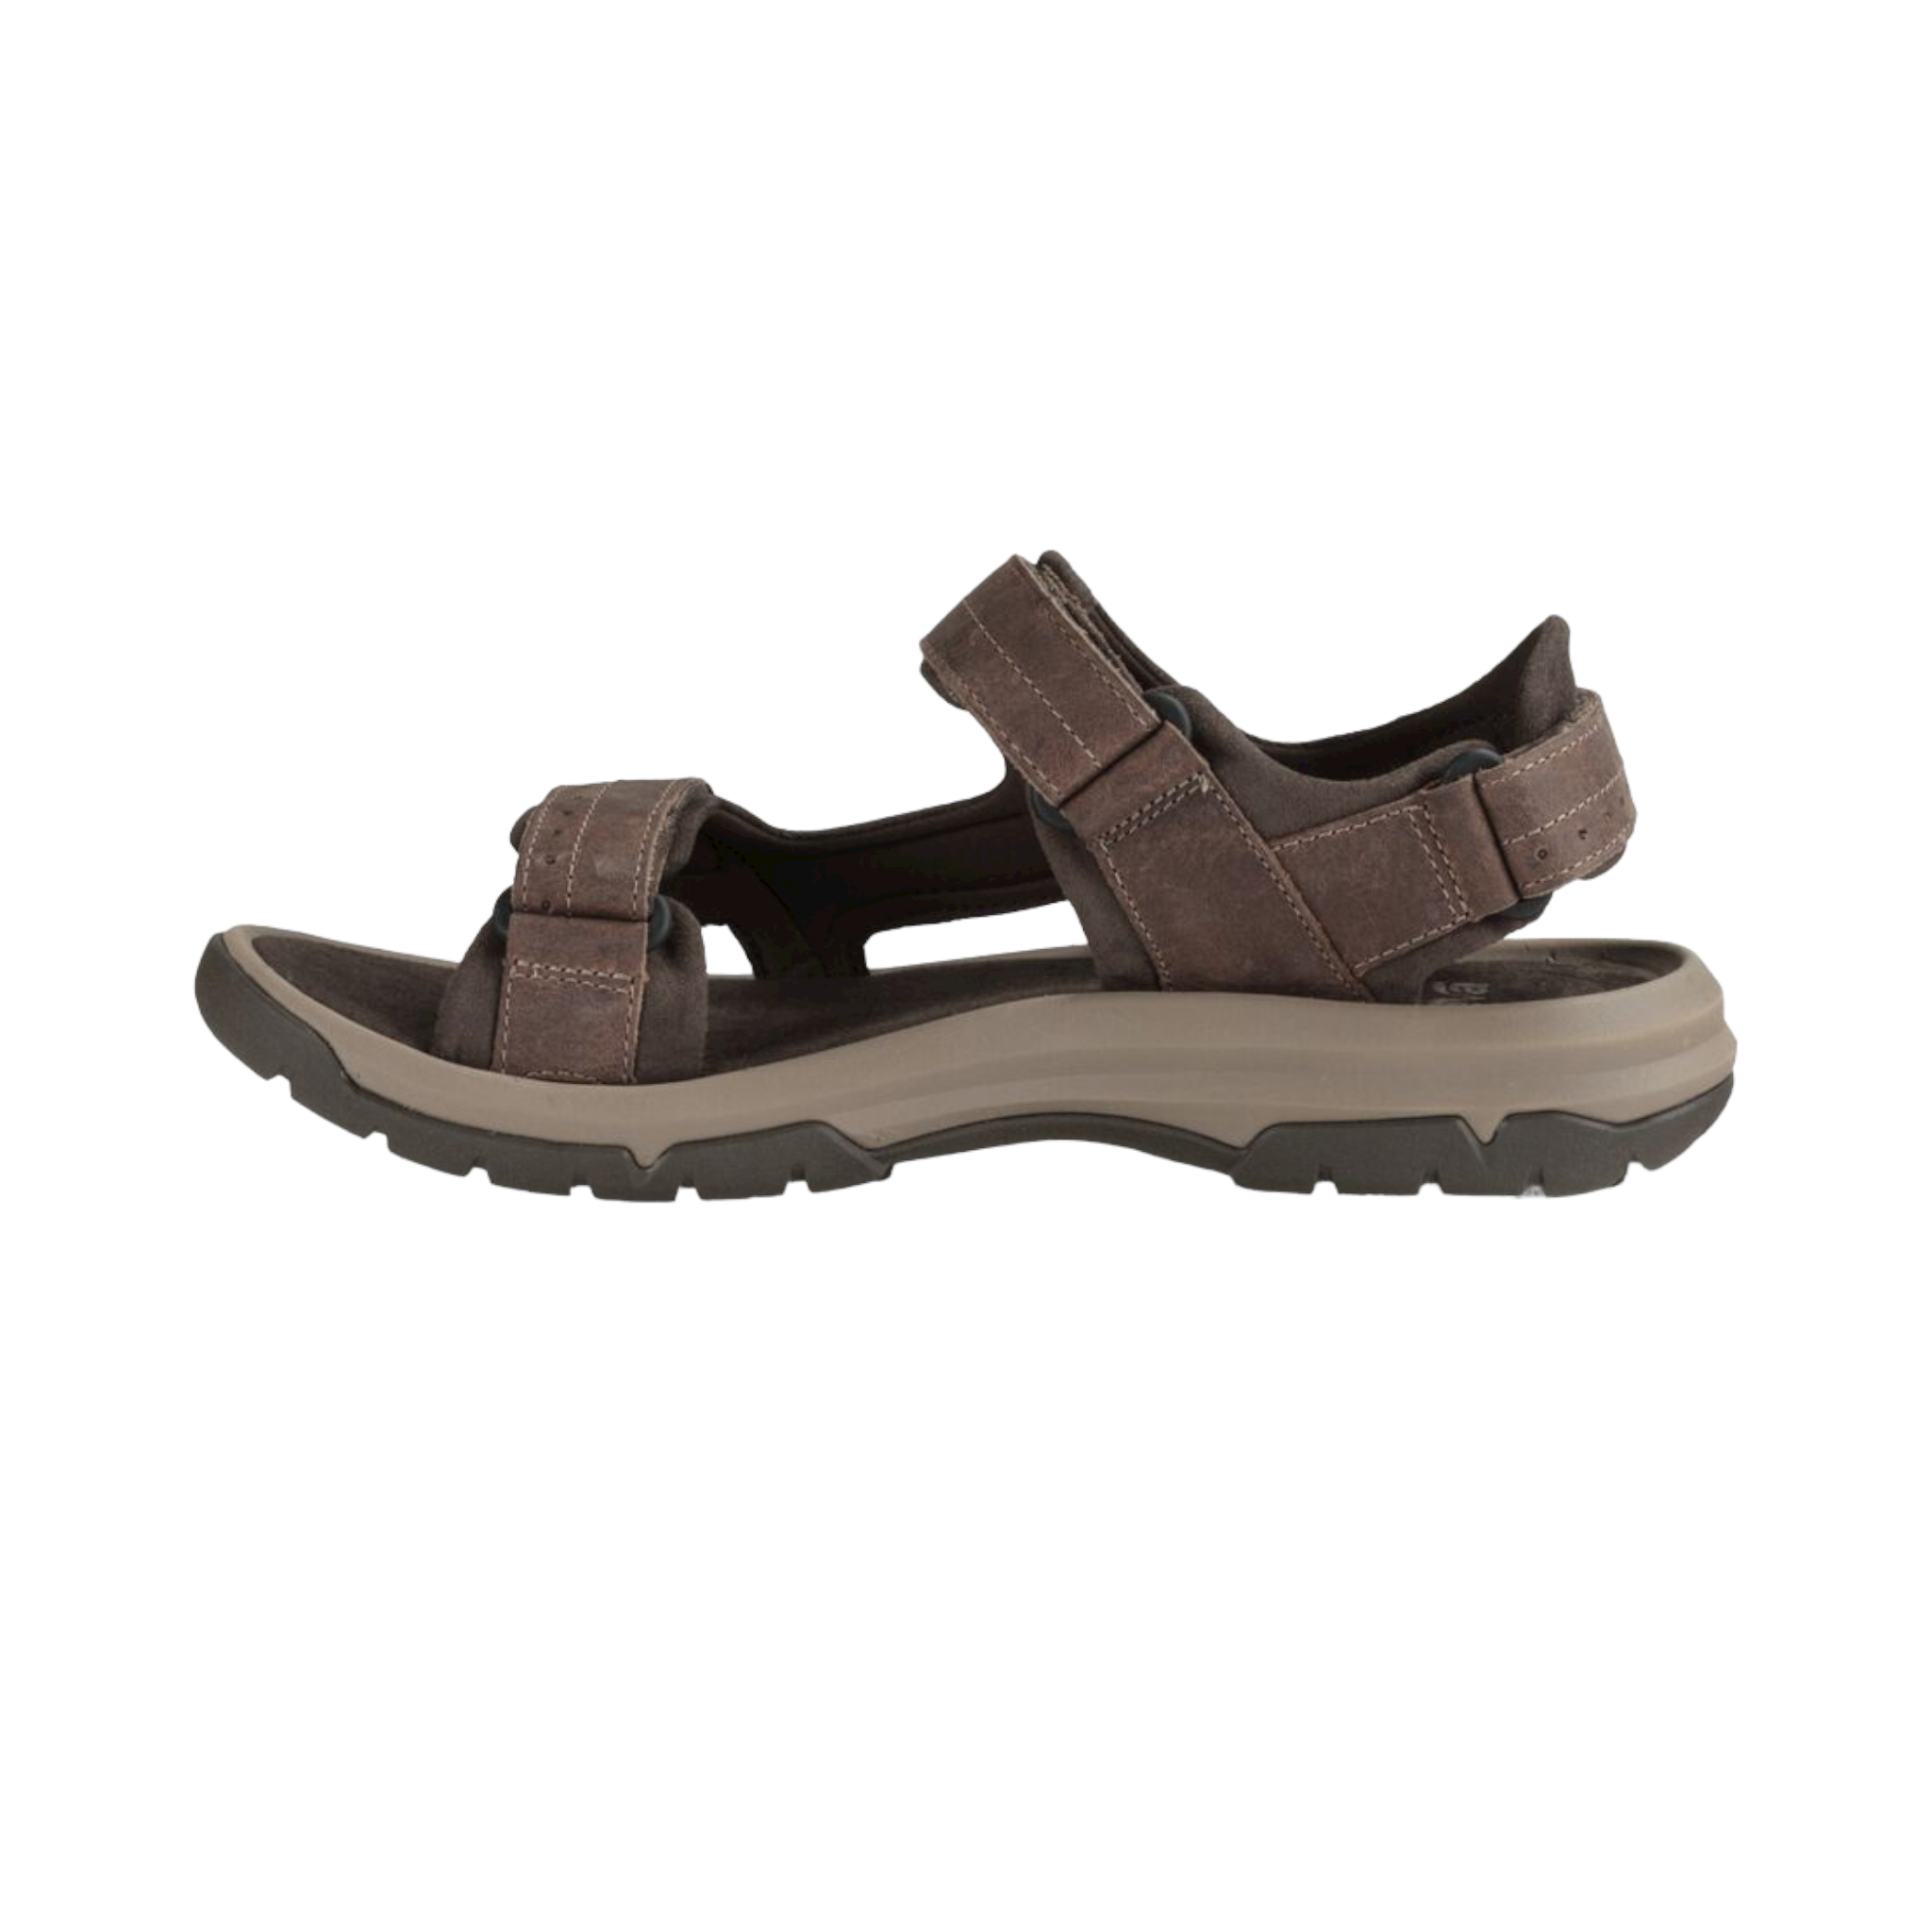 M Langdon - shoe&amp;me - Teva - Sandal - Eco Collection, Mens, Sandal, Summer 22